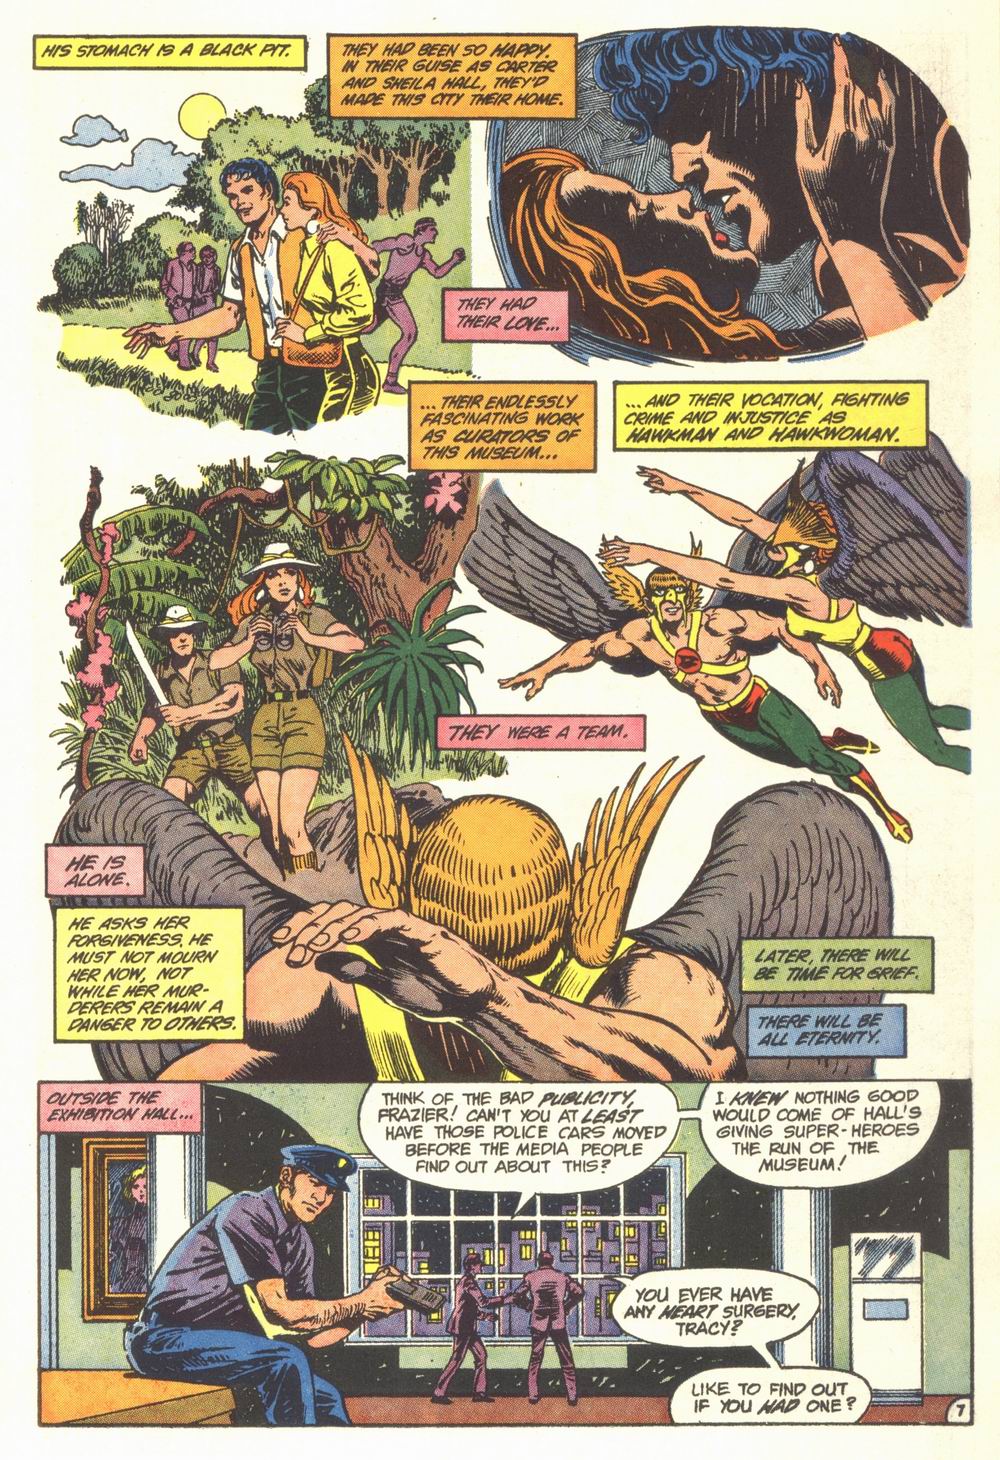 DC COMICS - THE SHADOW WAR OF HAWKMAN #2